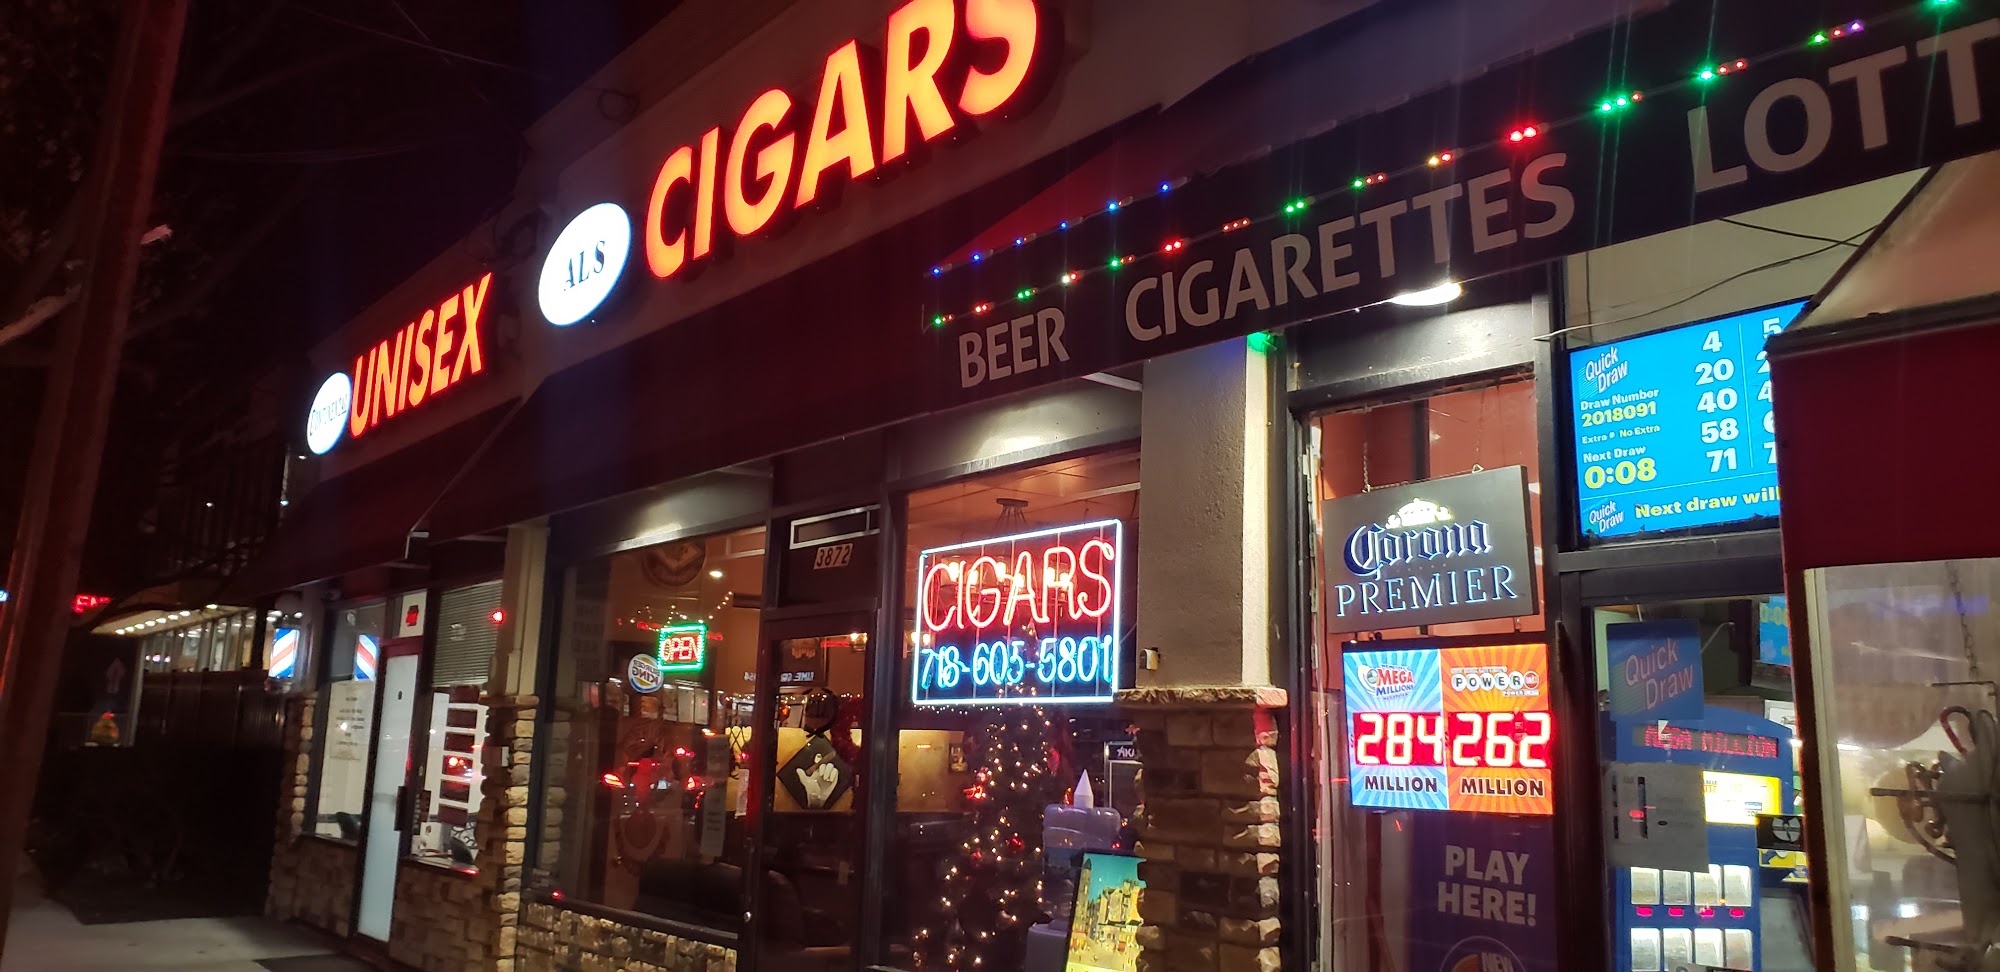 Al's Cigars